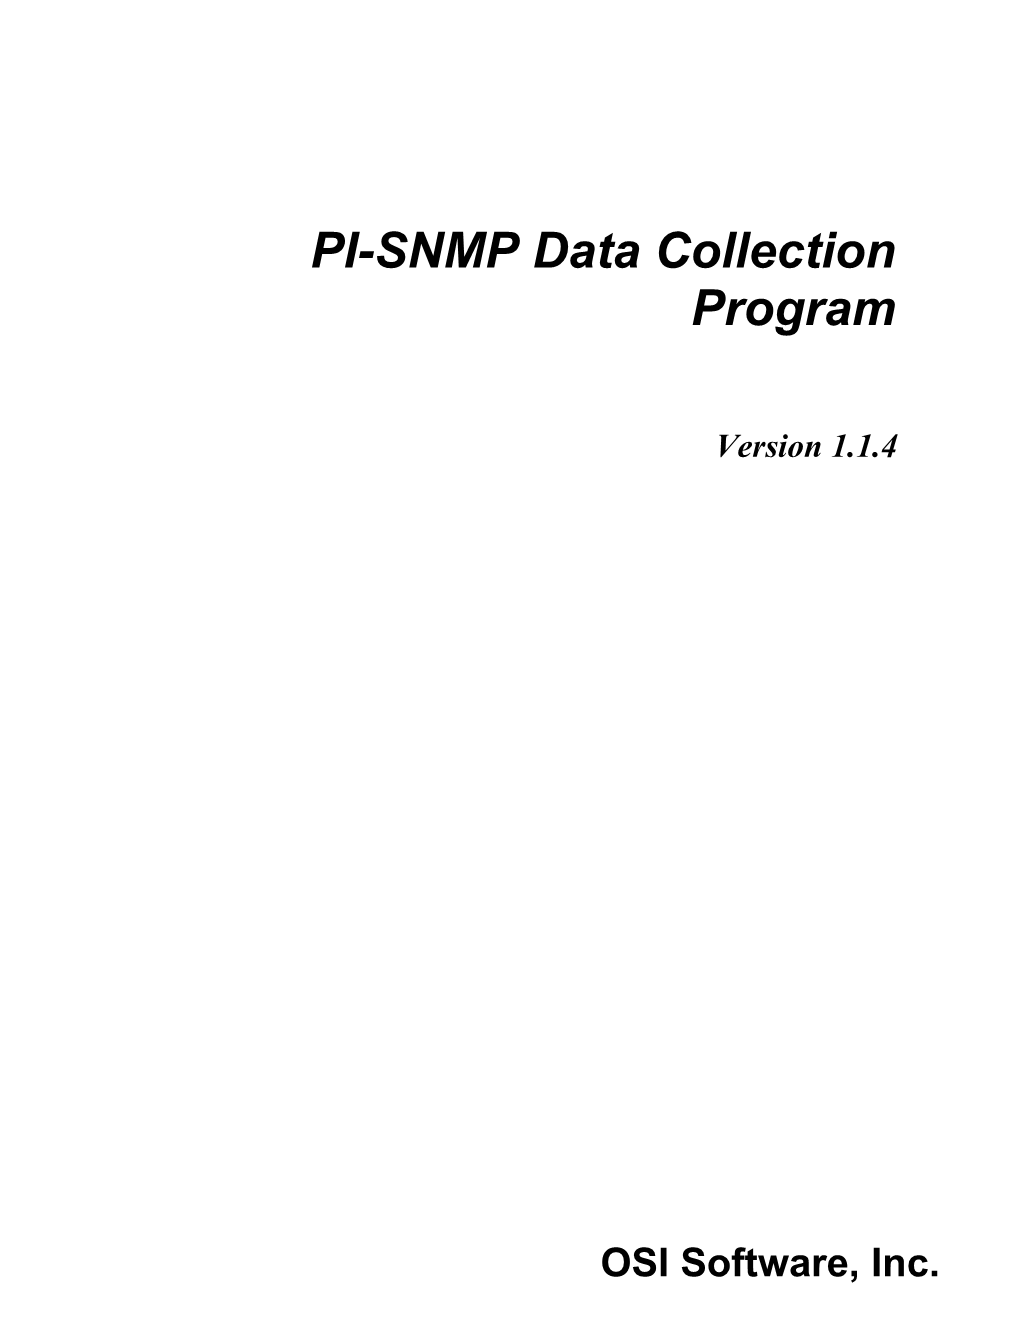 PI-SNMP Data Collection Program